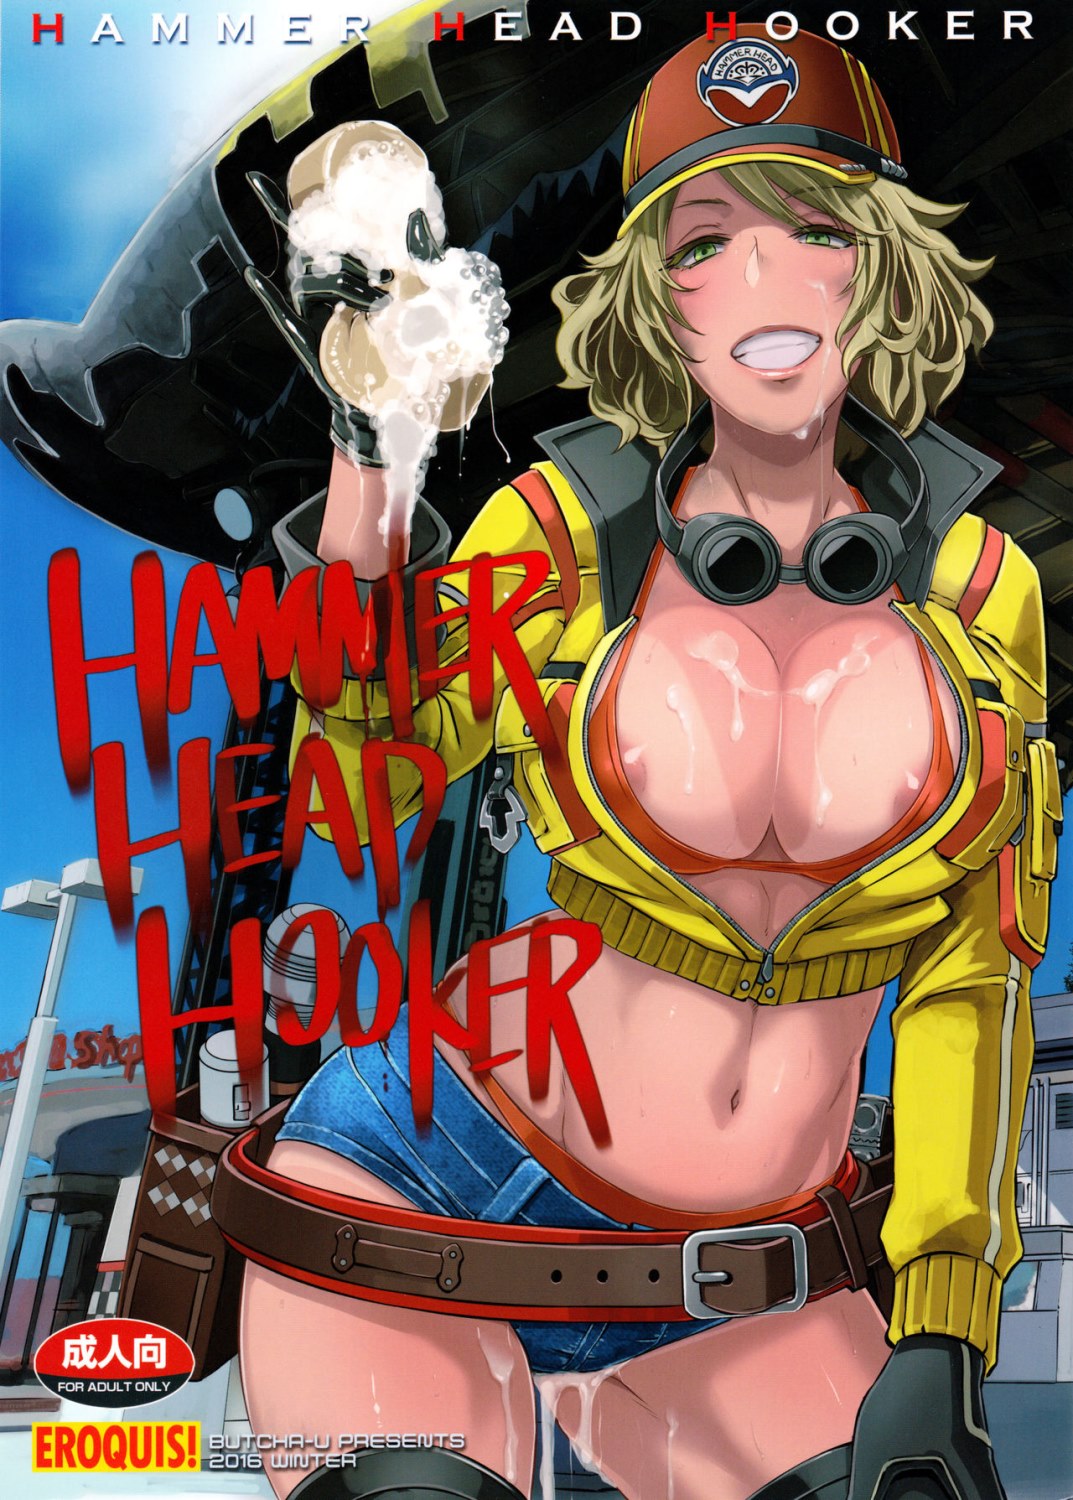 Street Prostitute Porn Comic - Hammer Head Hooker- Final Fantasy XV porn comics 8 muses